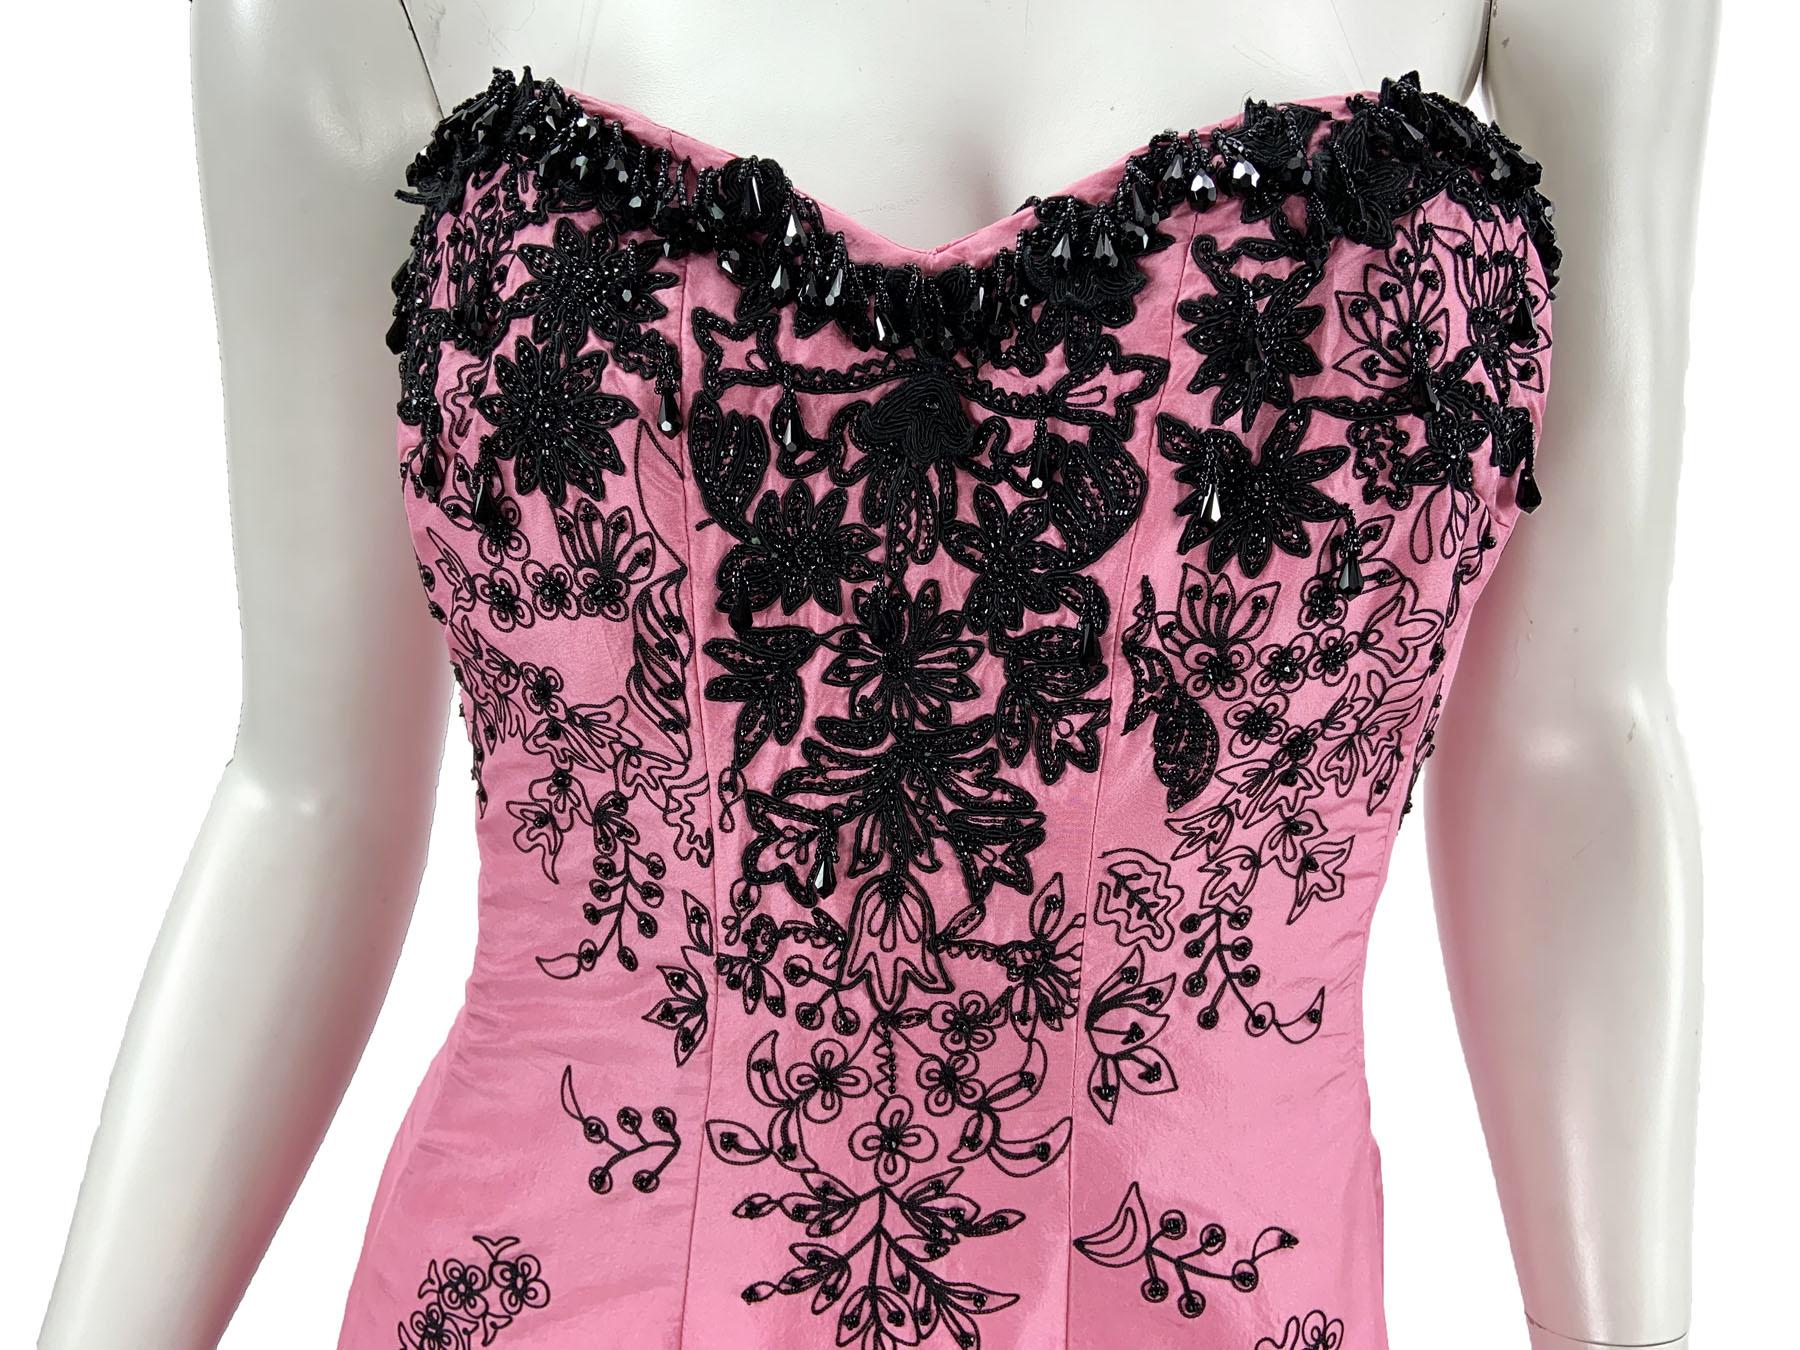 Oscar de la Renta S/S 2004 Collection Pink Silk Taffeta Embellished Dress Gown 8 For Sale 4